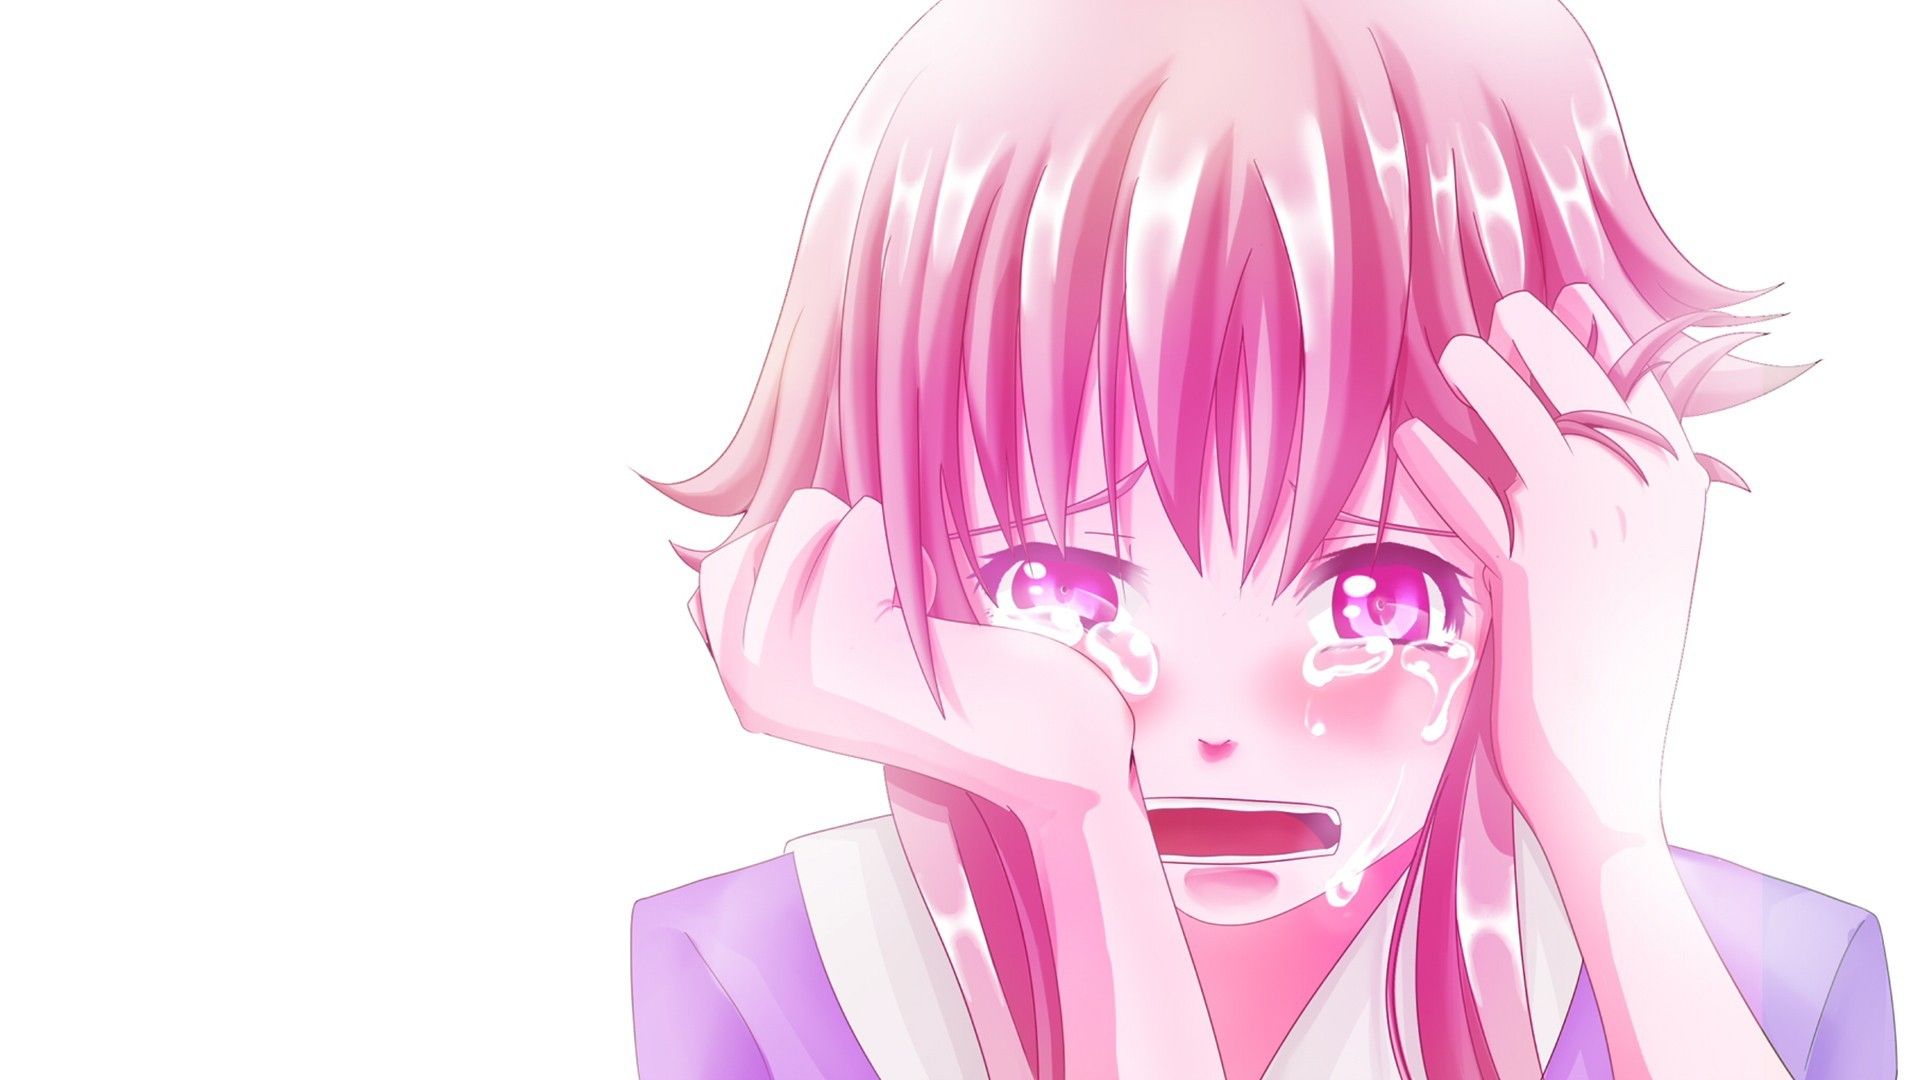 Crying Anime Girl Background Wallpaper .baltana.com